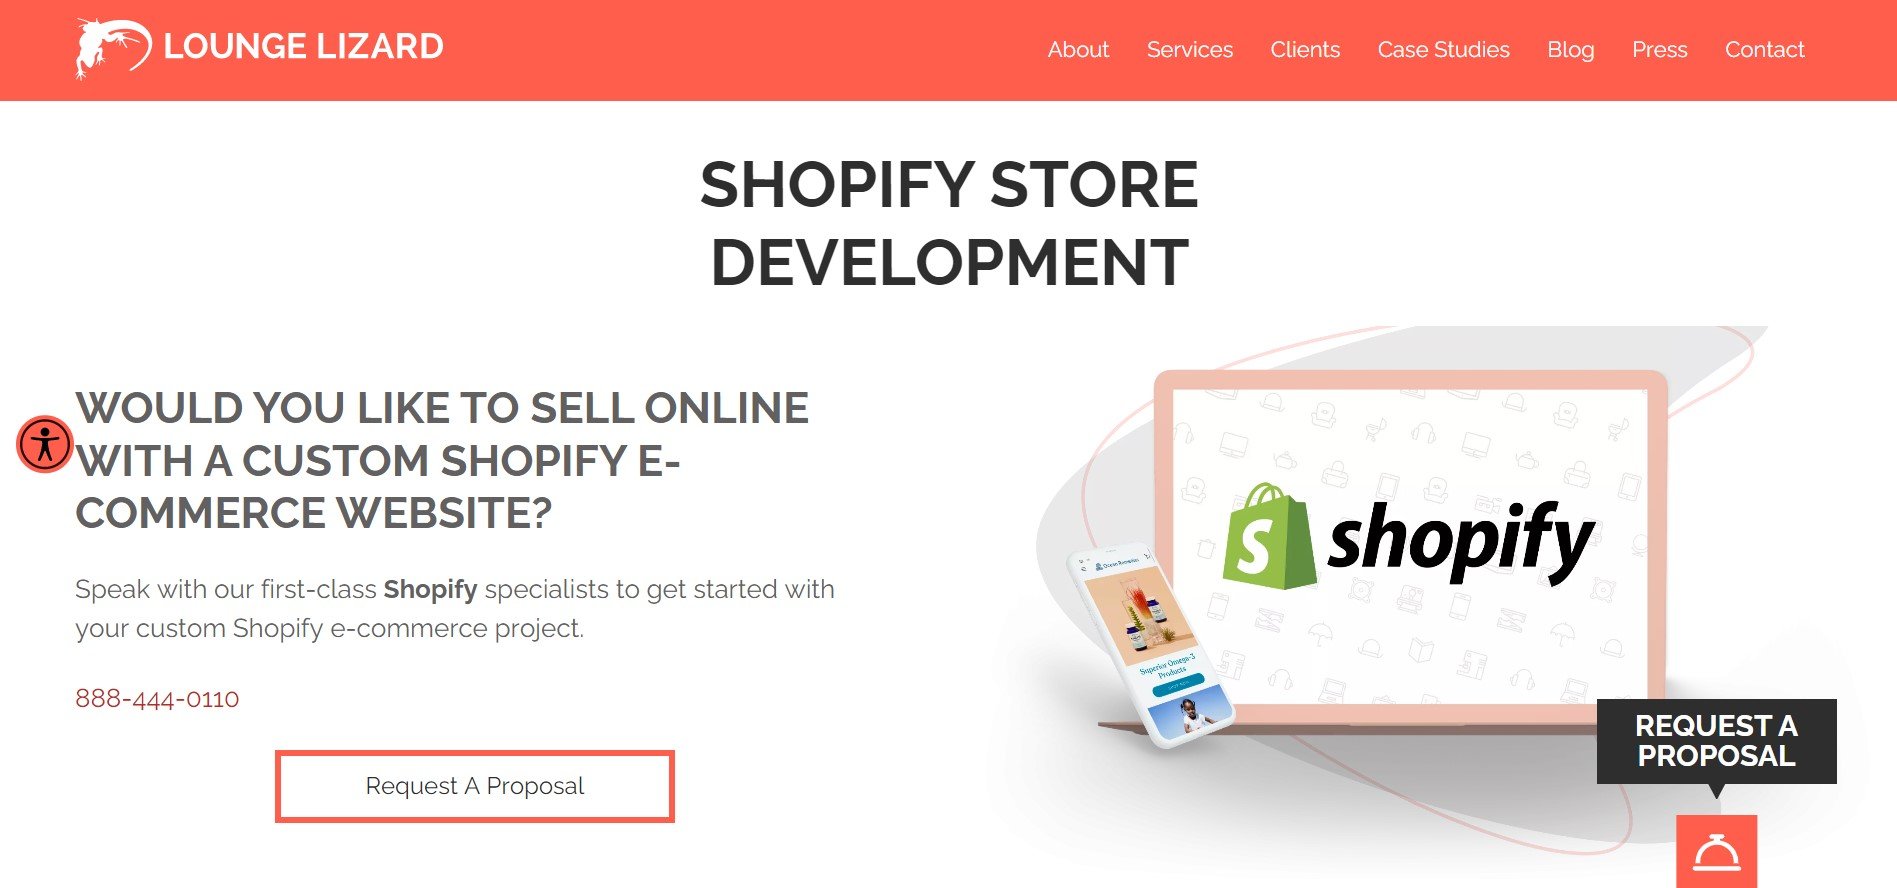 Shopify eCommerce website development: Lounge Lizard